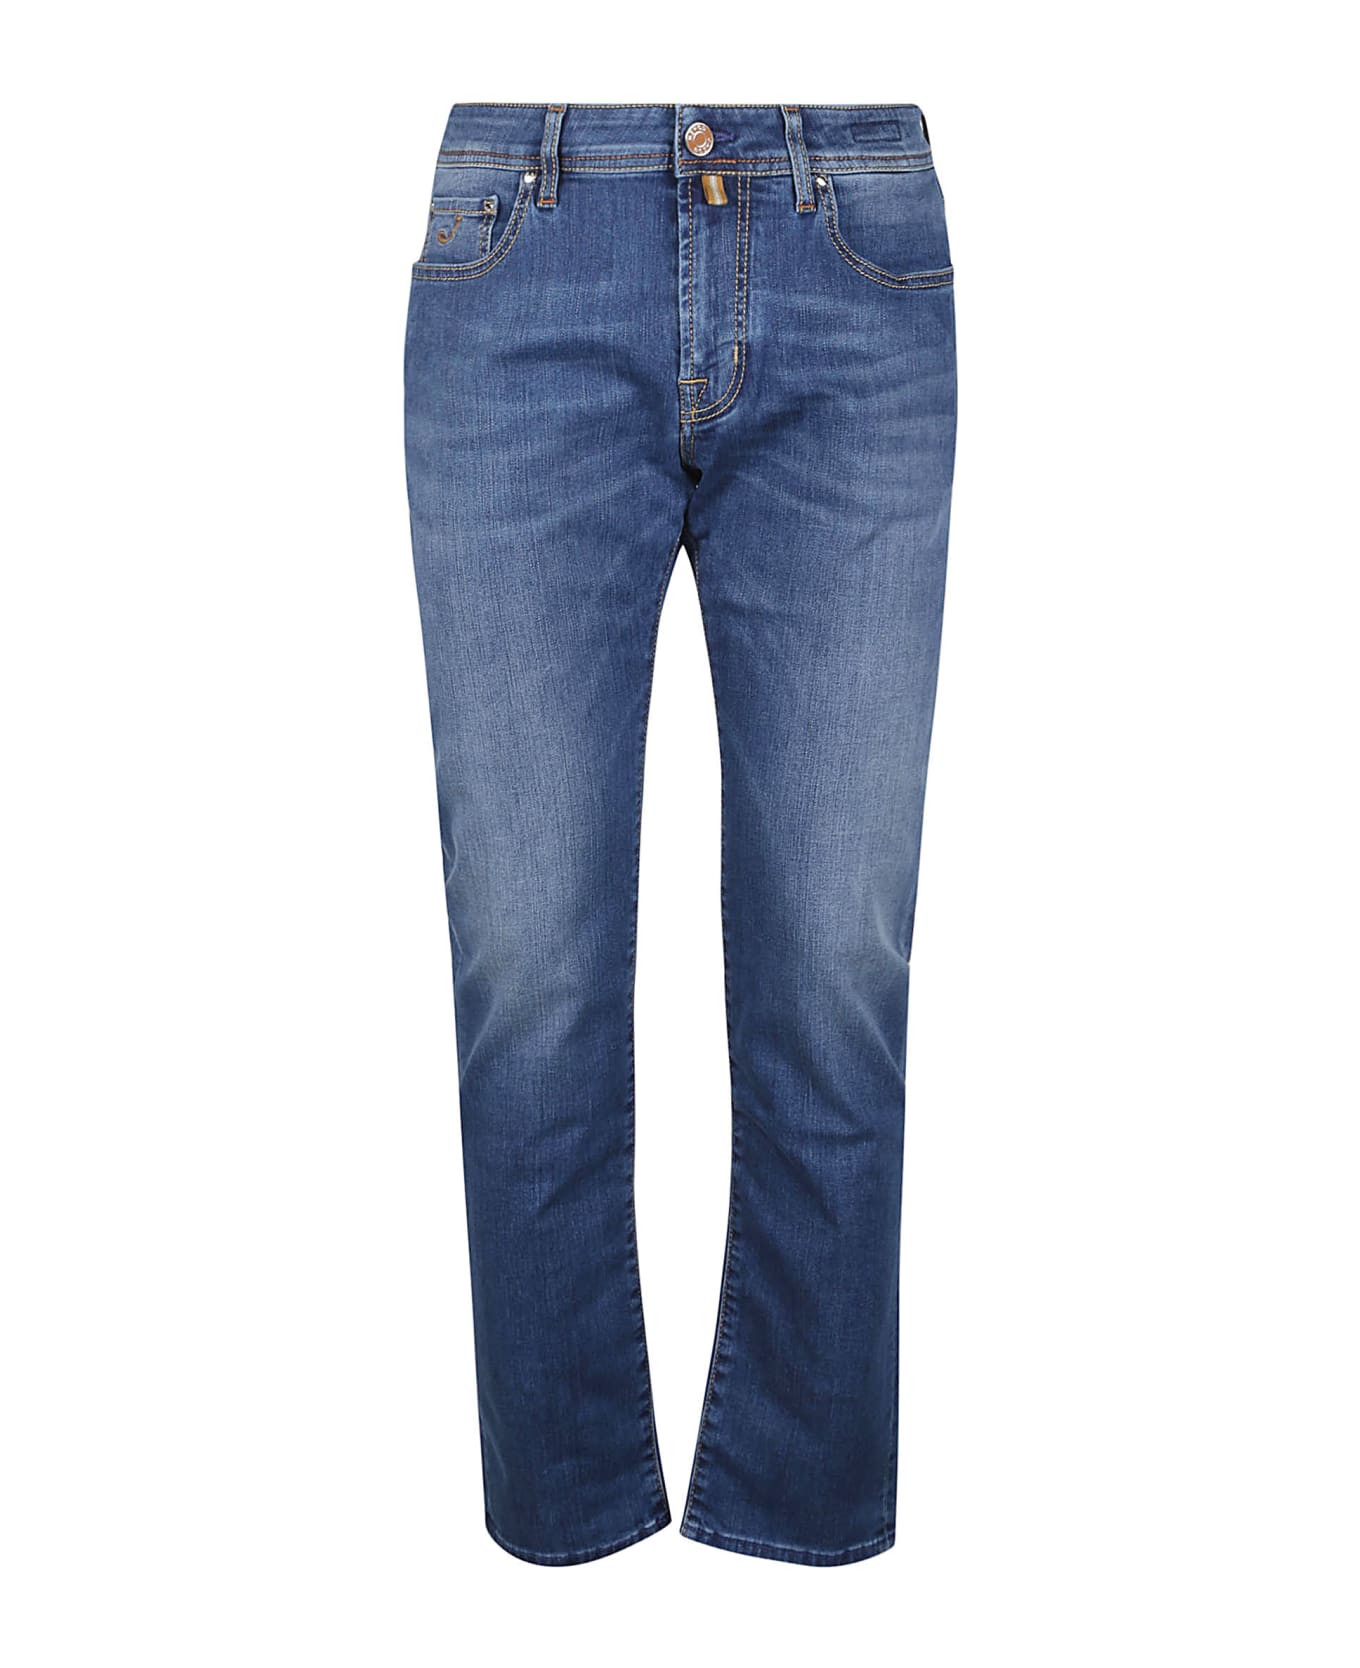 Jacob Cohen 5 Pocket Jeans Slim Fit Bard Fast - D Blu ボトムス